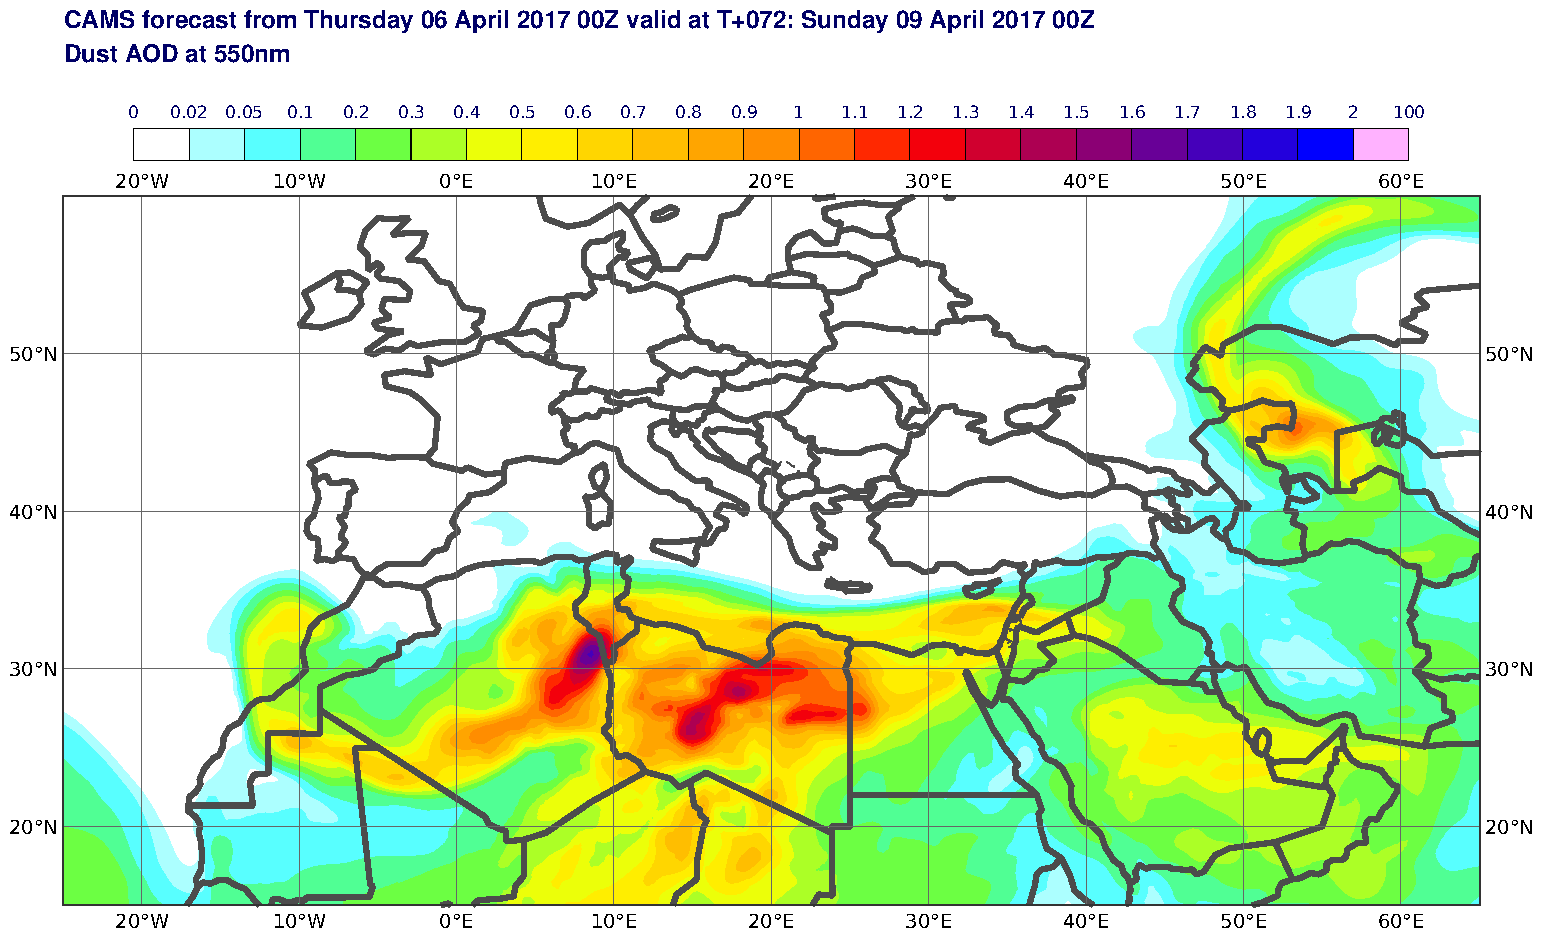 Dust AOD at 550nm valid at T72 - 2017-04-09 00:00